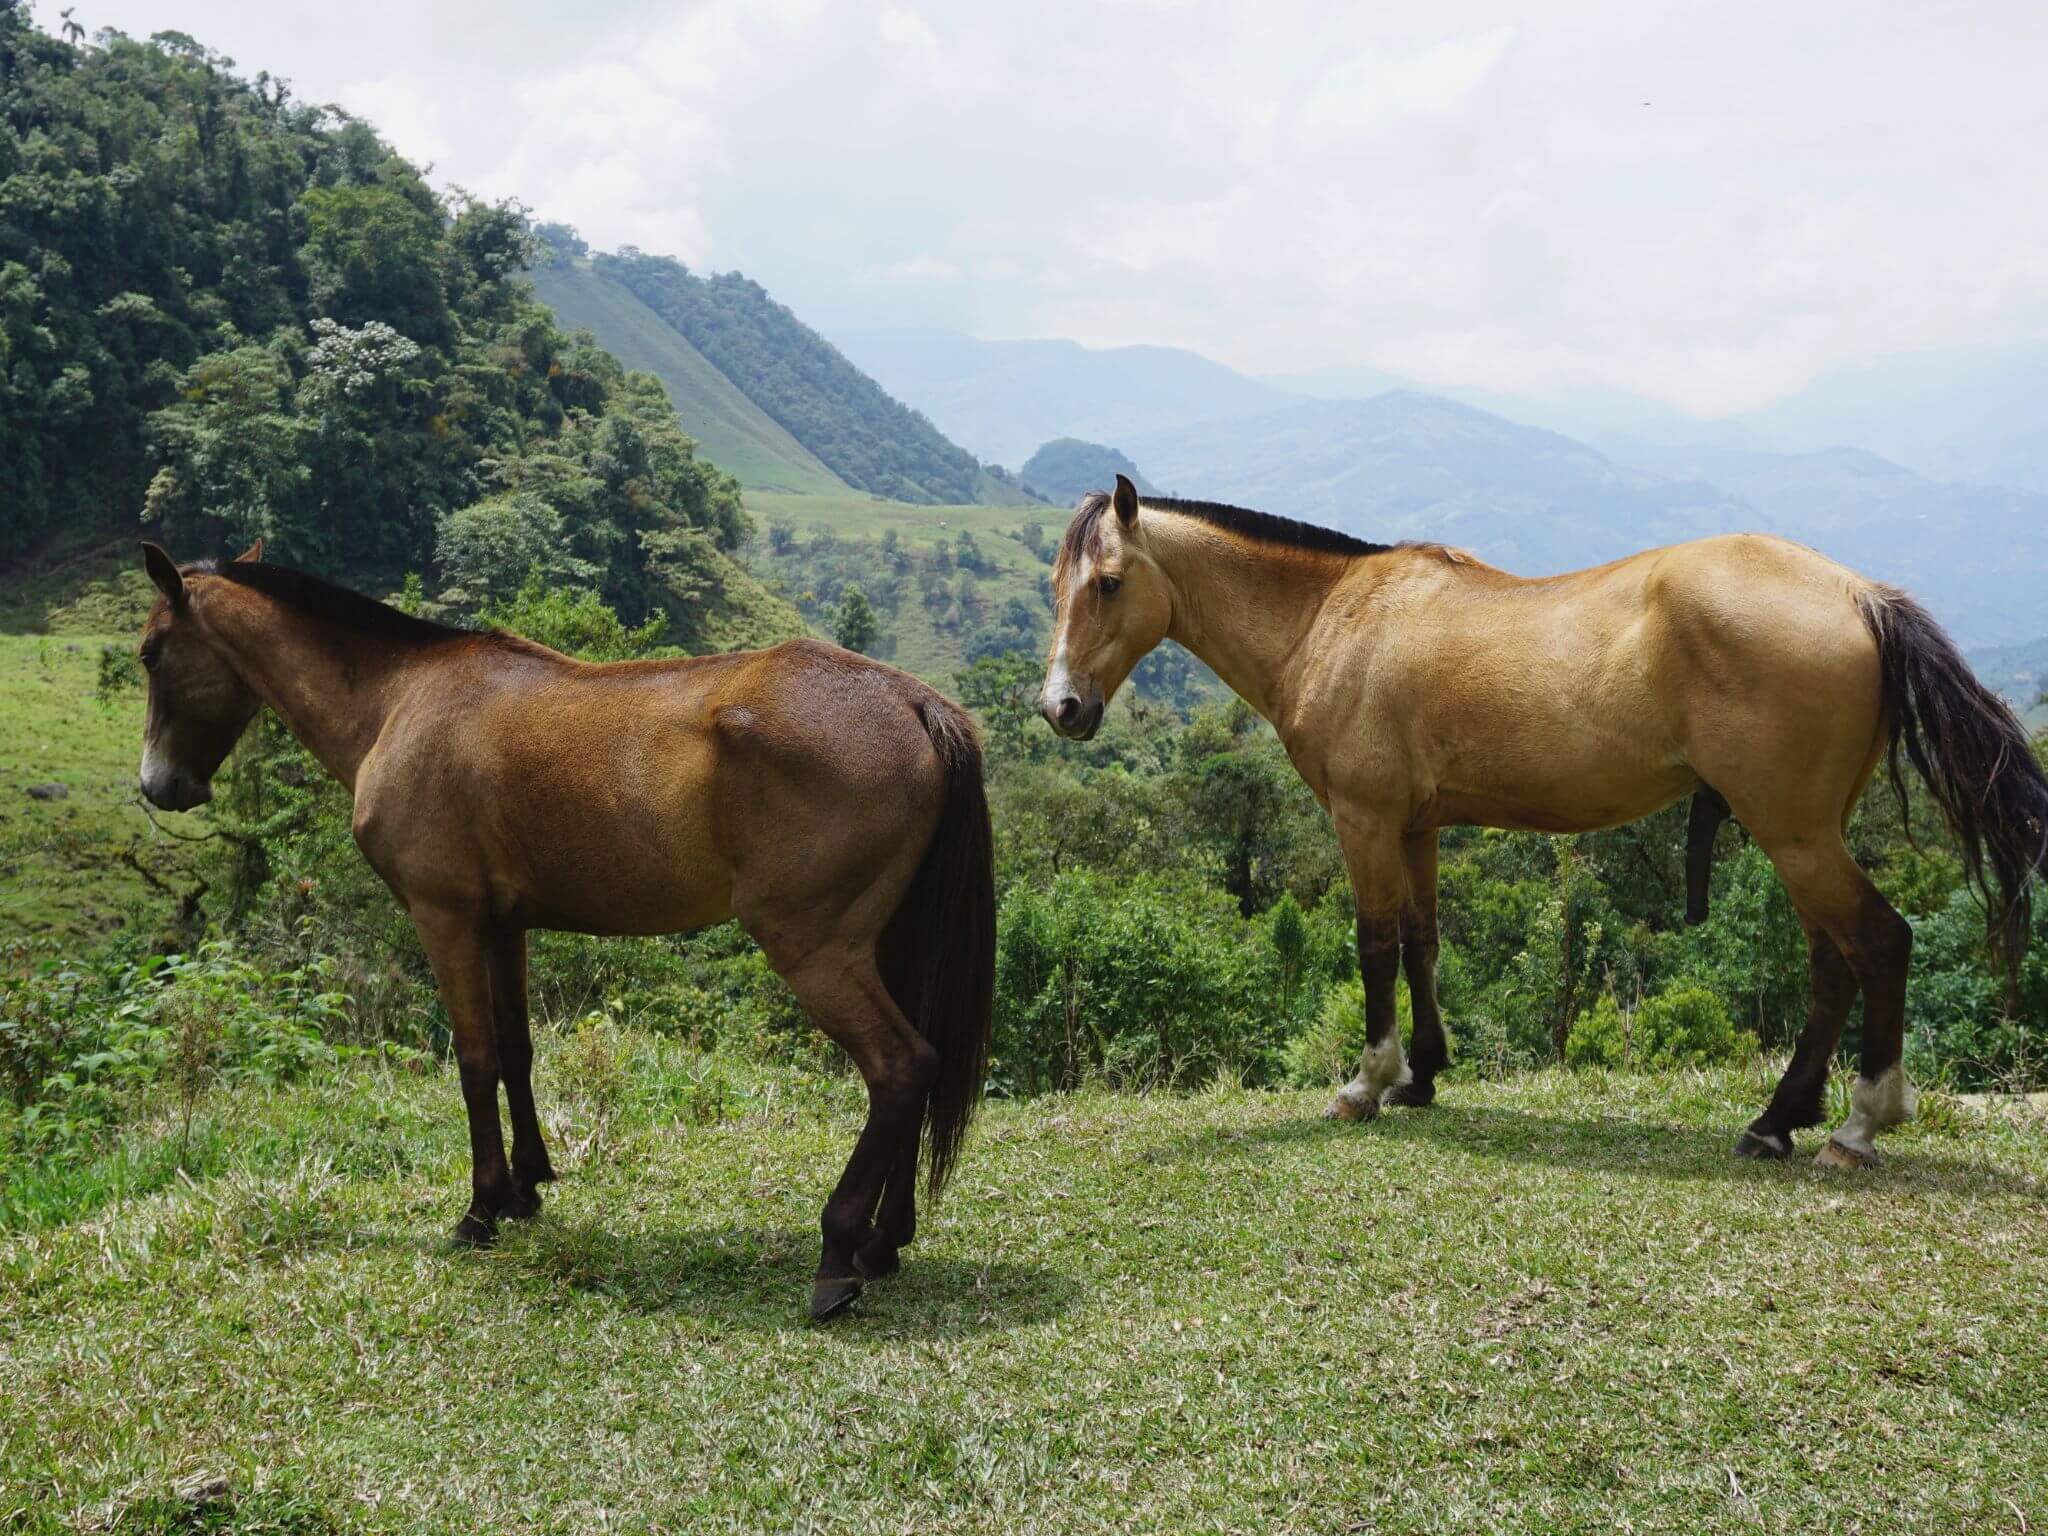 The ranch's horses